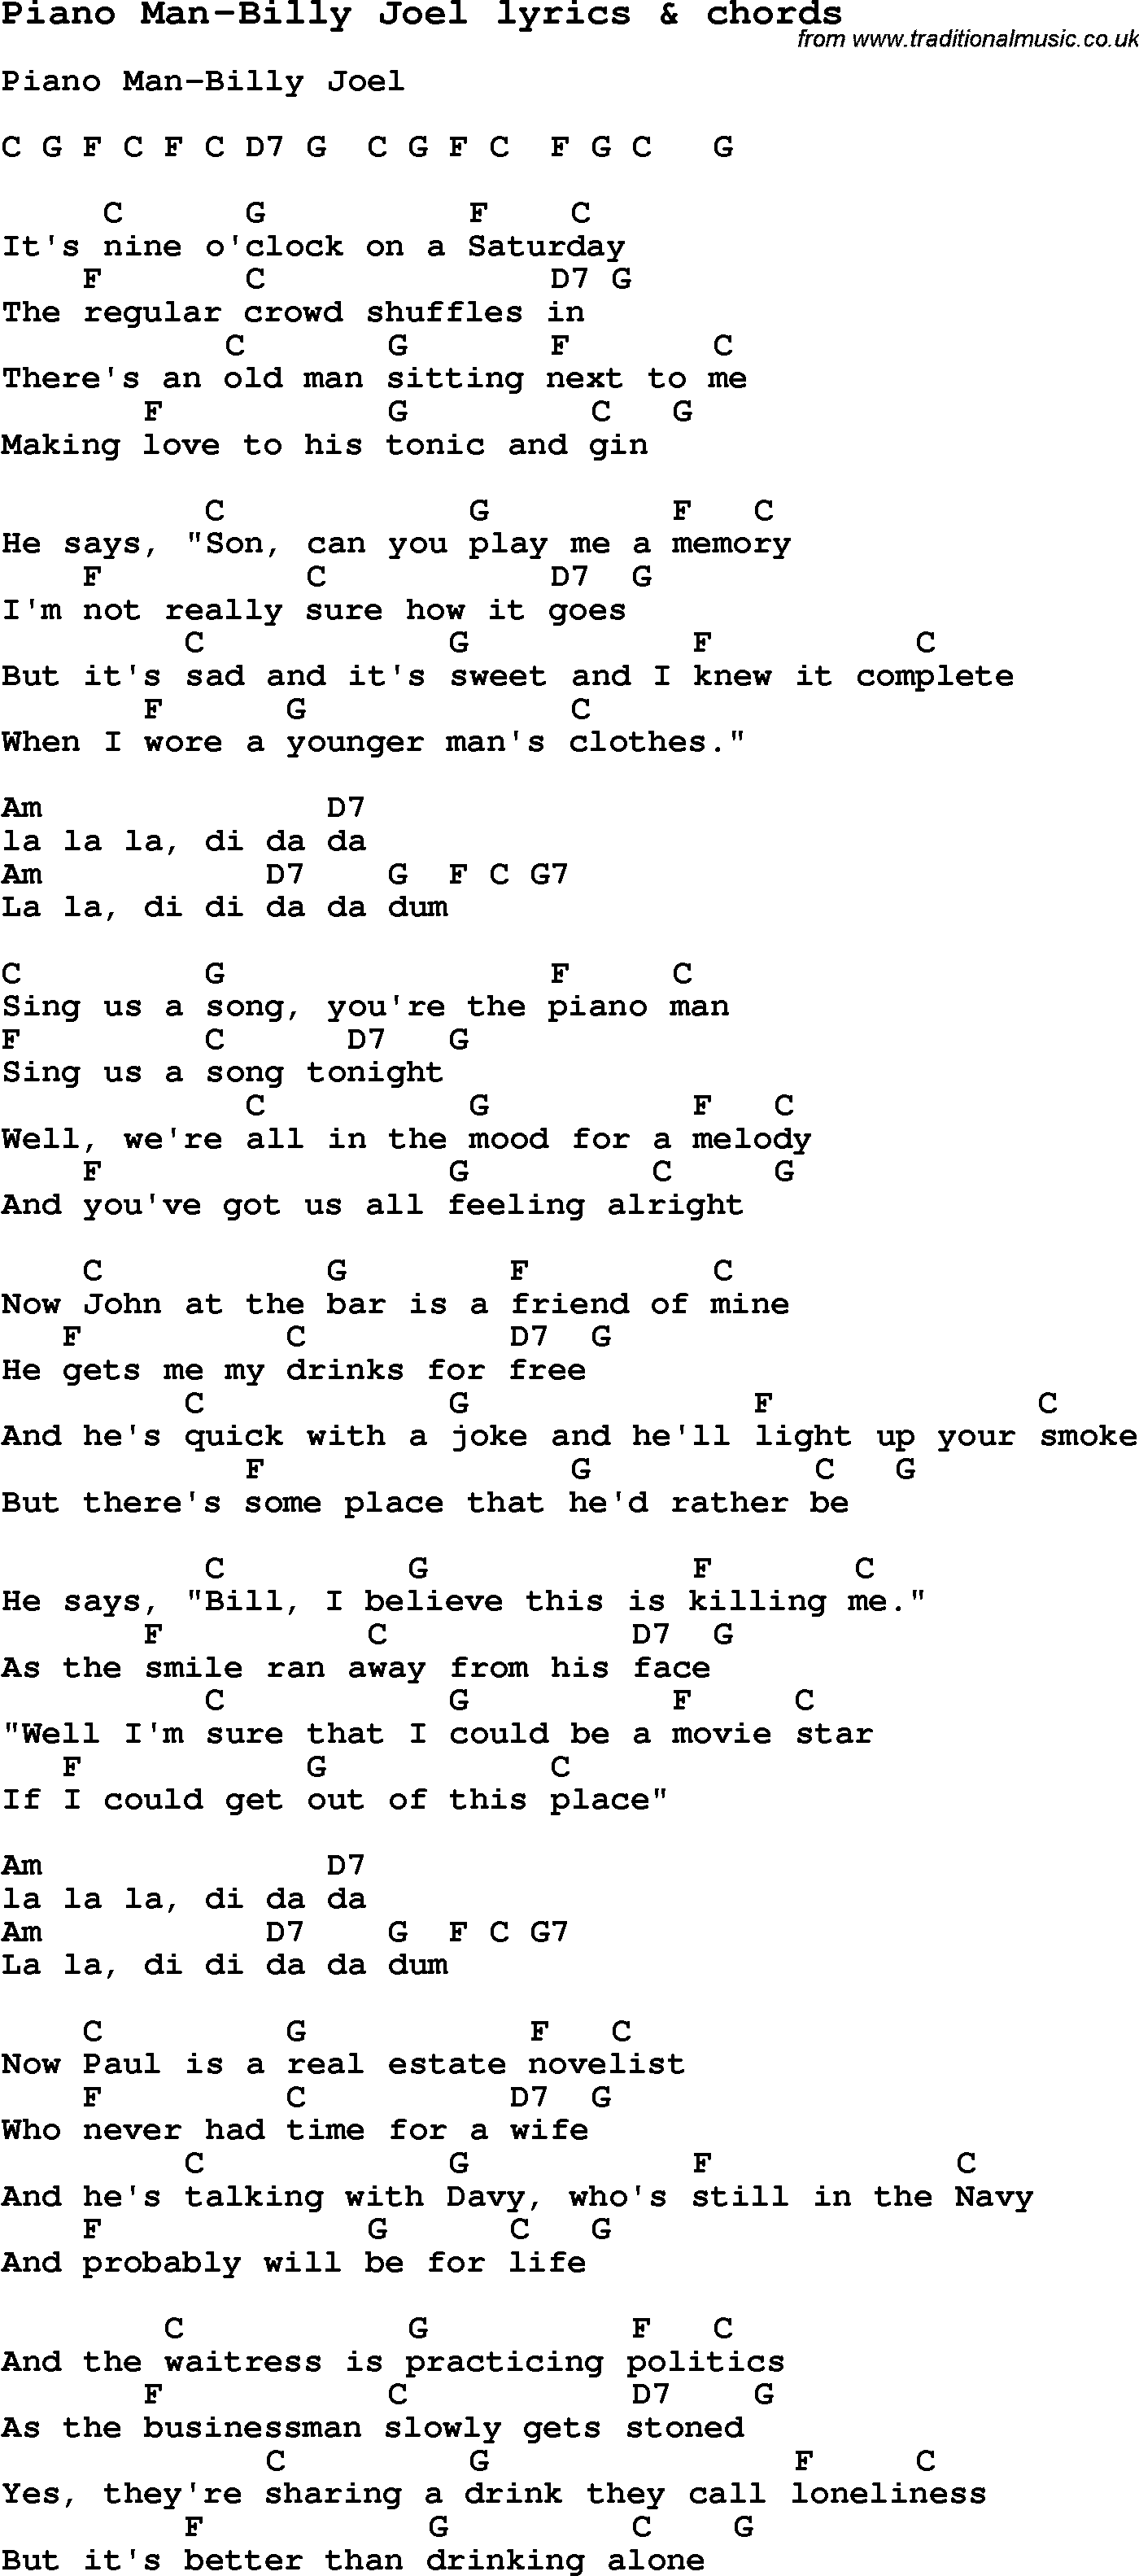 Love Song Lyrics for: Piano Man-Billy Joel with chords for Ukulele, Guitar Banjo etc.